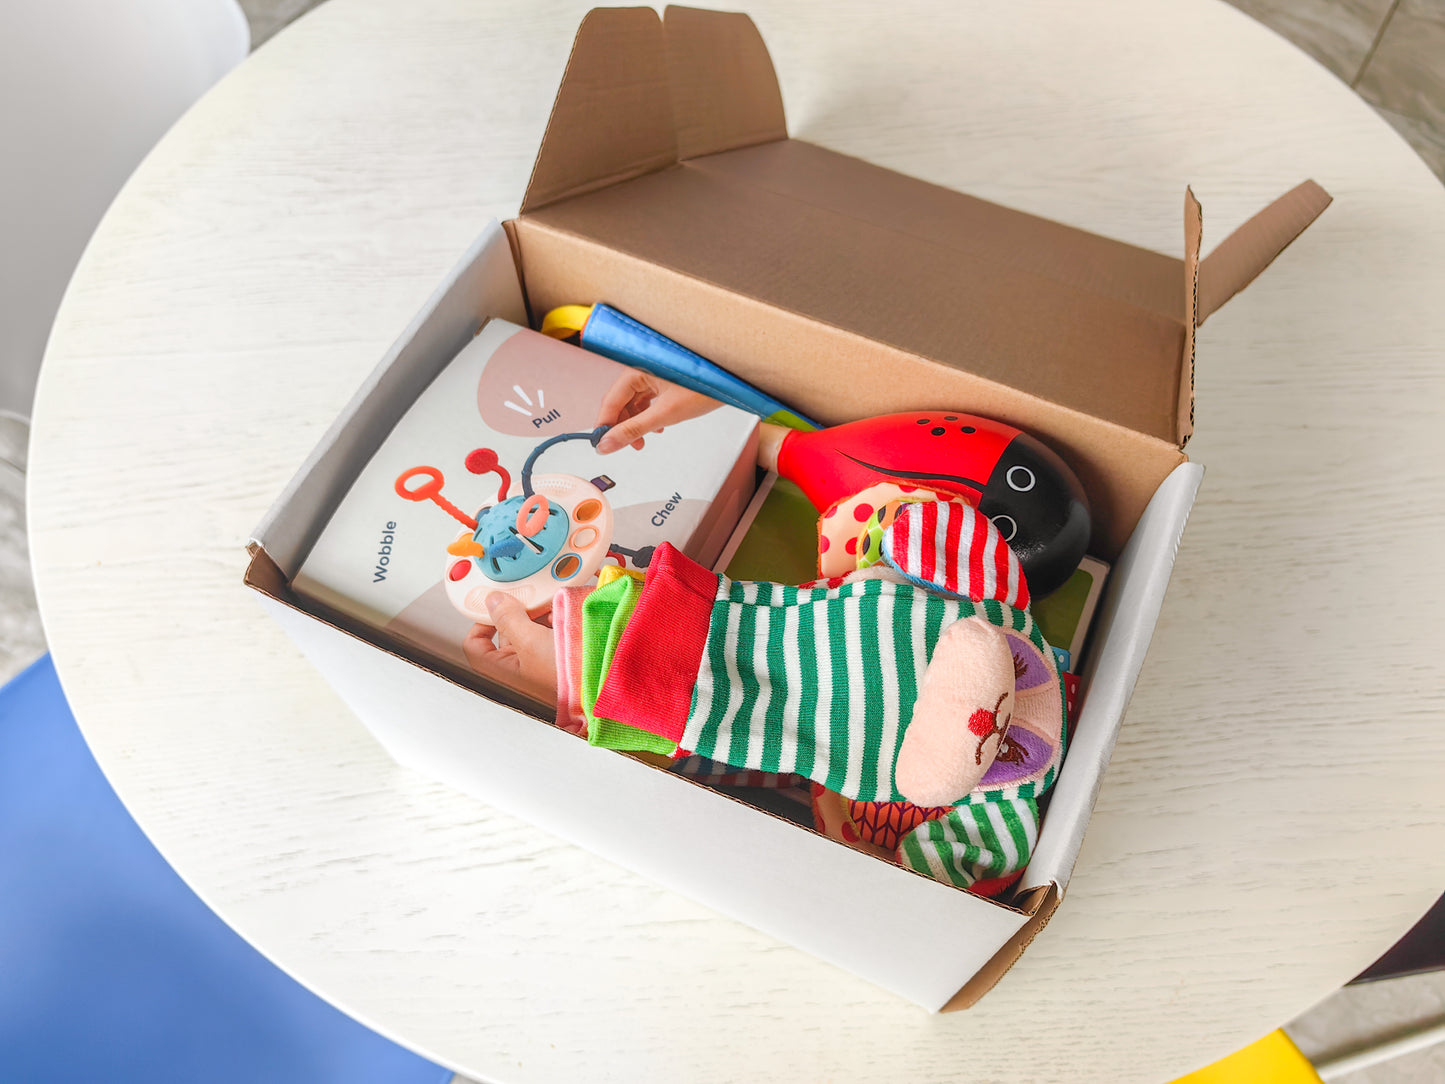 Project Montessori™ Newborn Gift Set